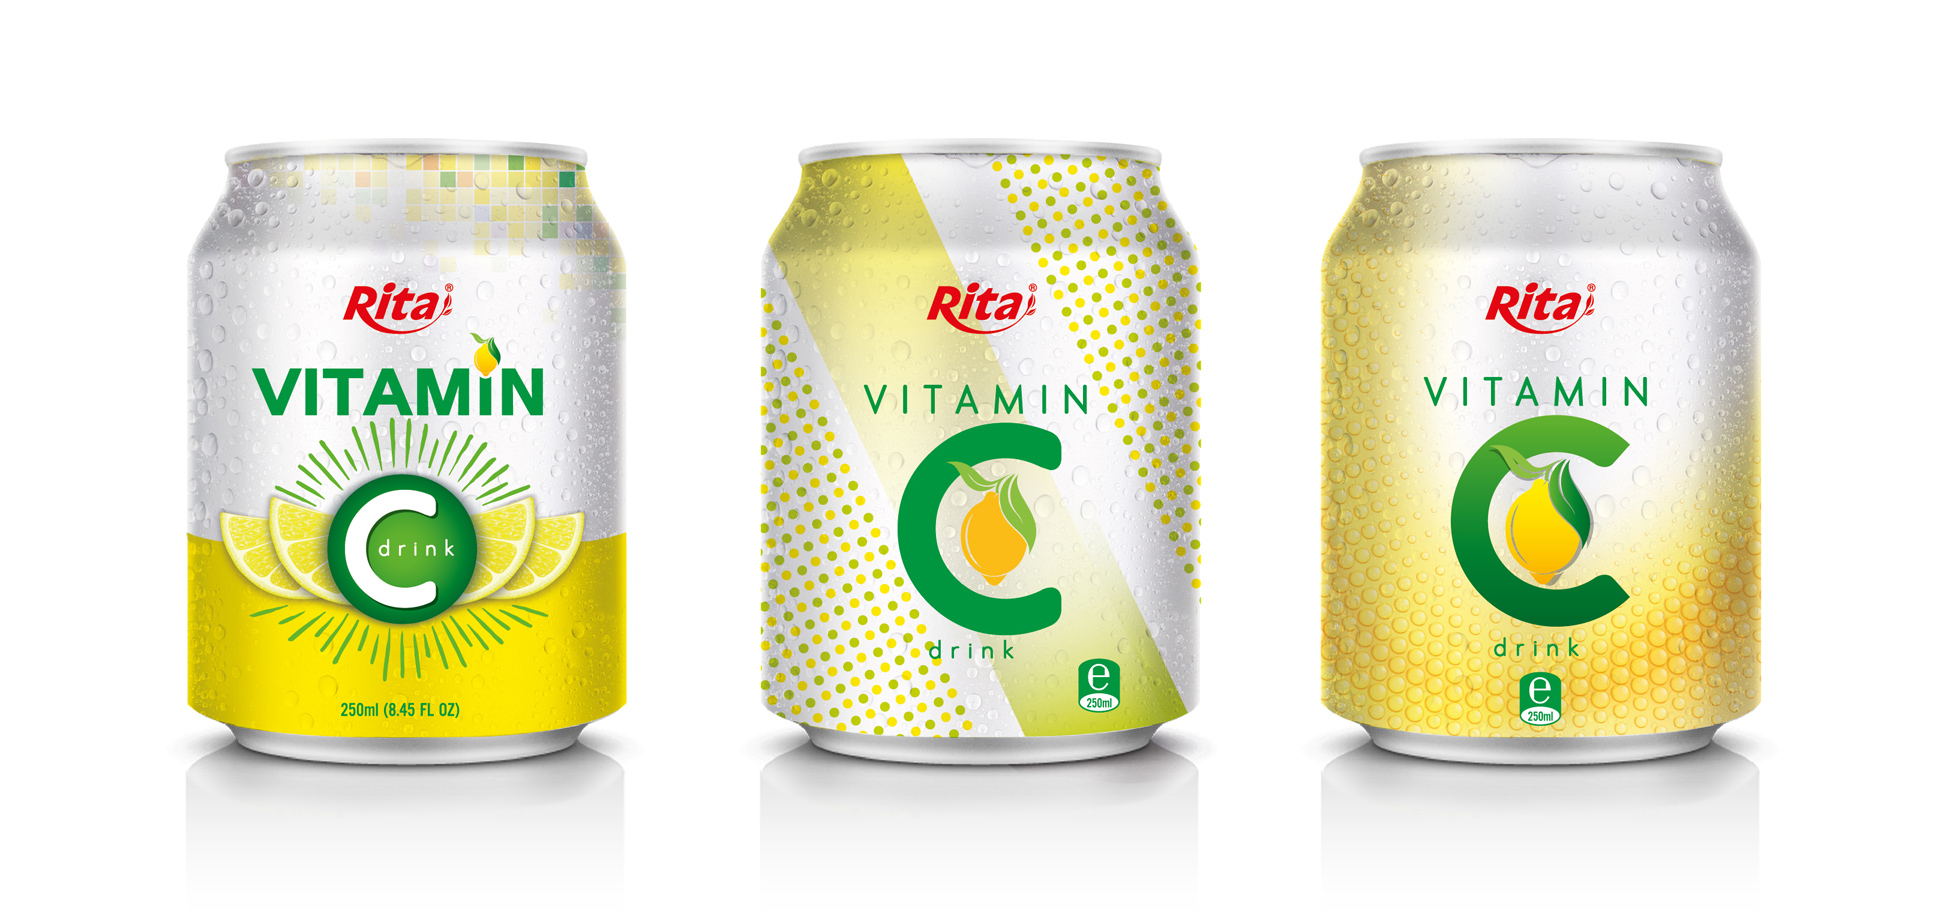 vitamin C drink 250ml can of RITA US